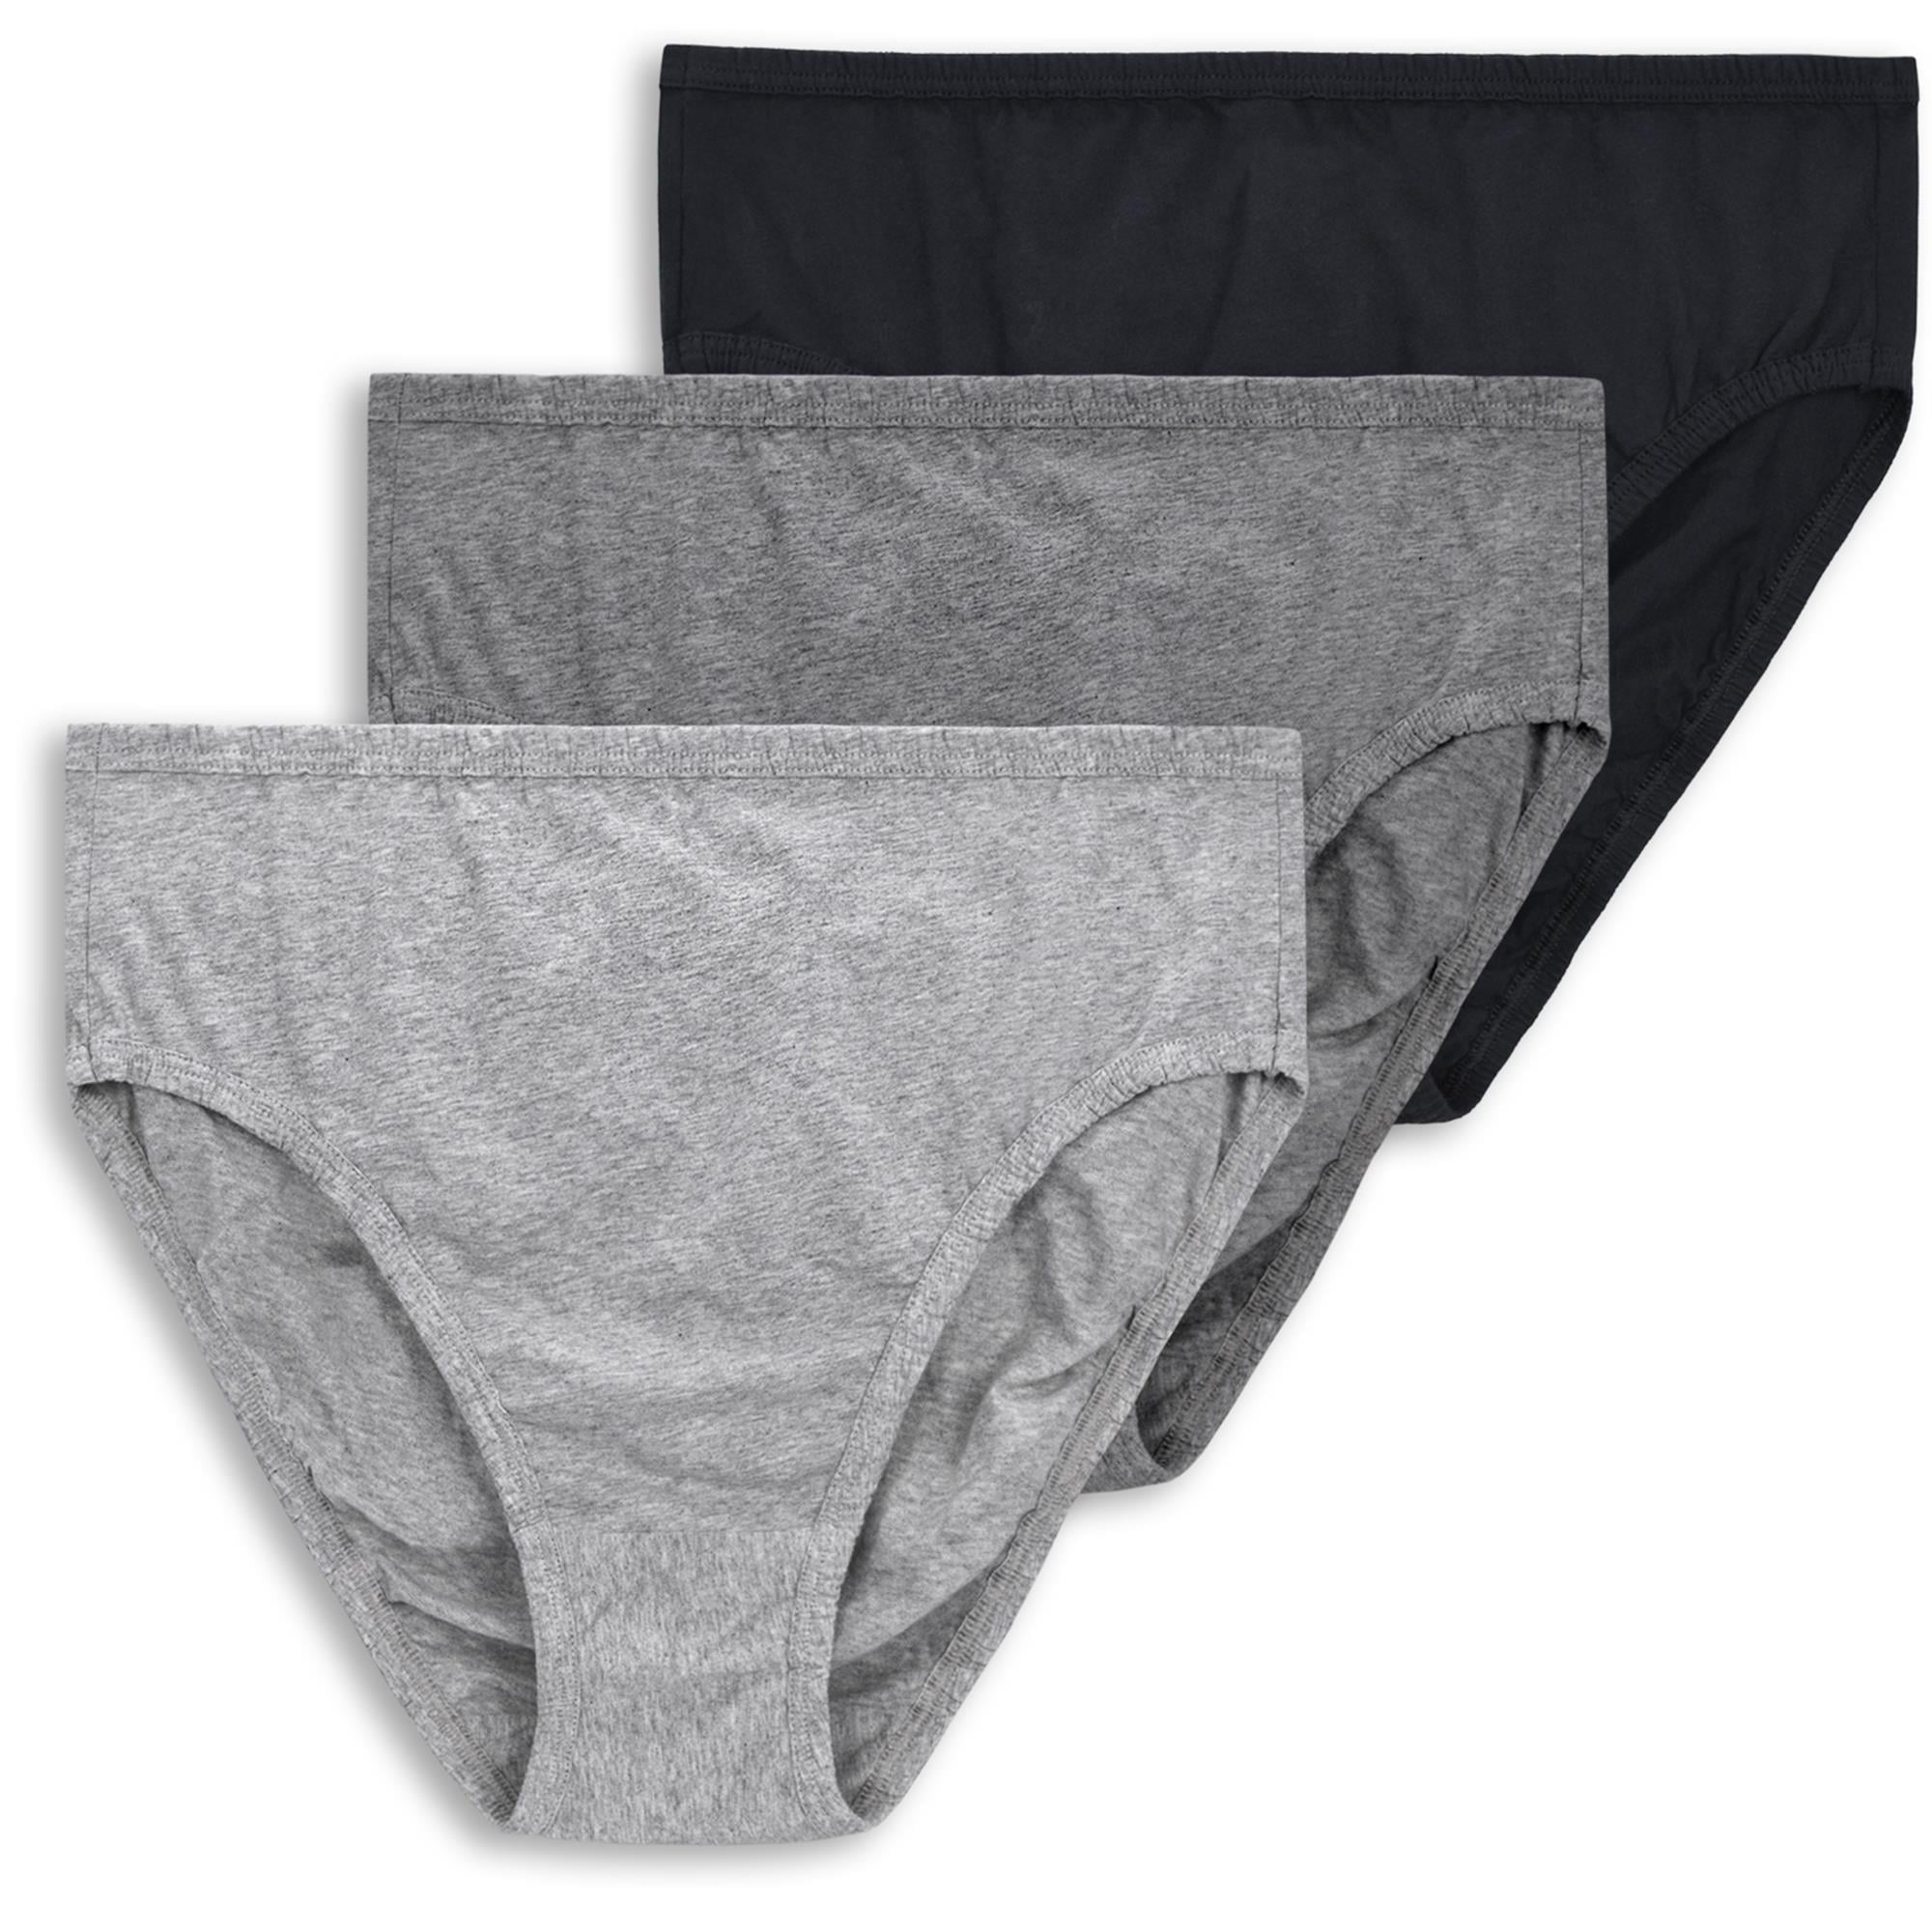 Jockey Organic Cotton Stretch Briefs Panties Soft & Comfortable Size M 3  Pack